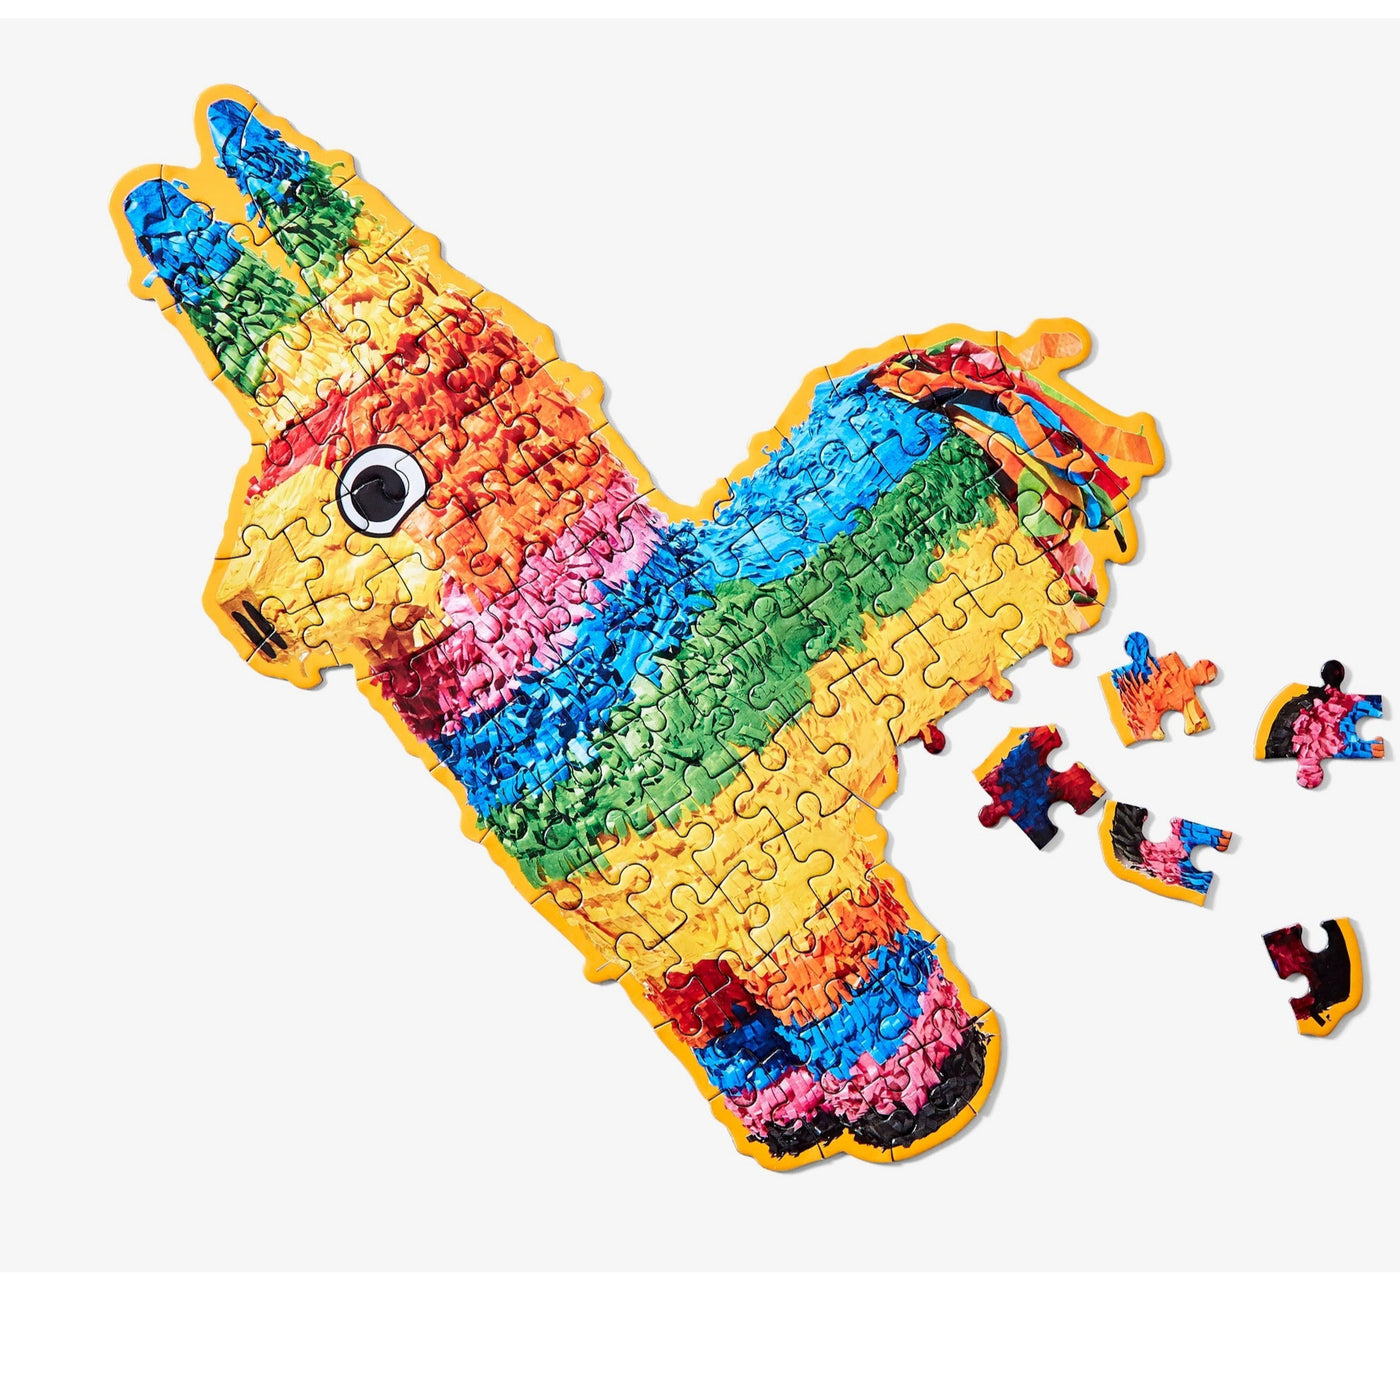 Assembled colorful donkey Piñata